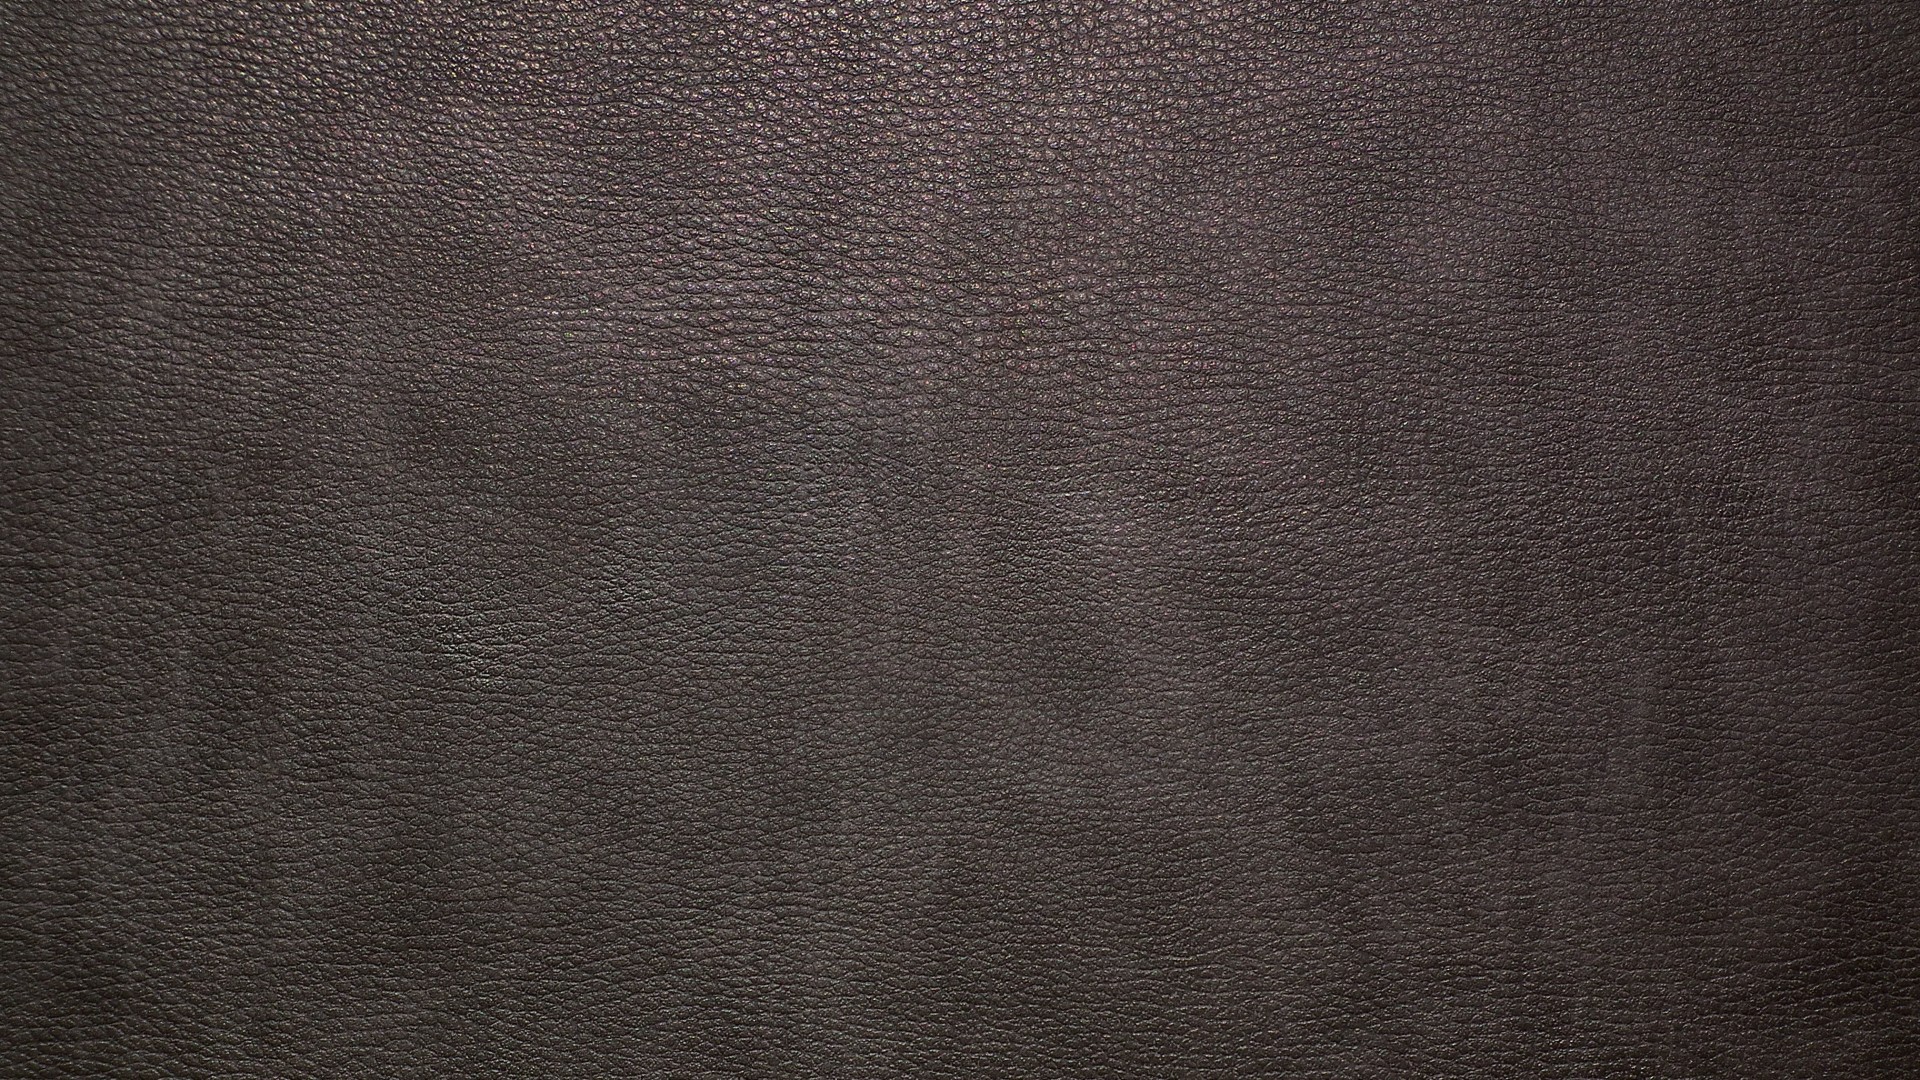 Black Leather Backgrounds Free Download | PixelsTalk.Net